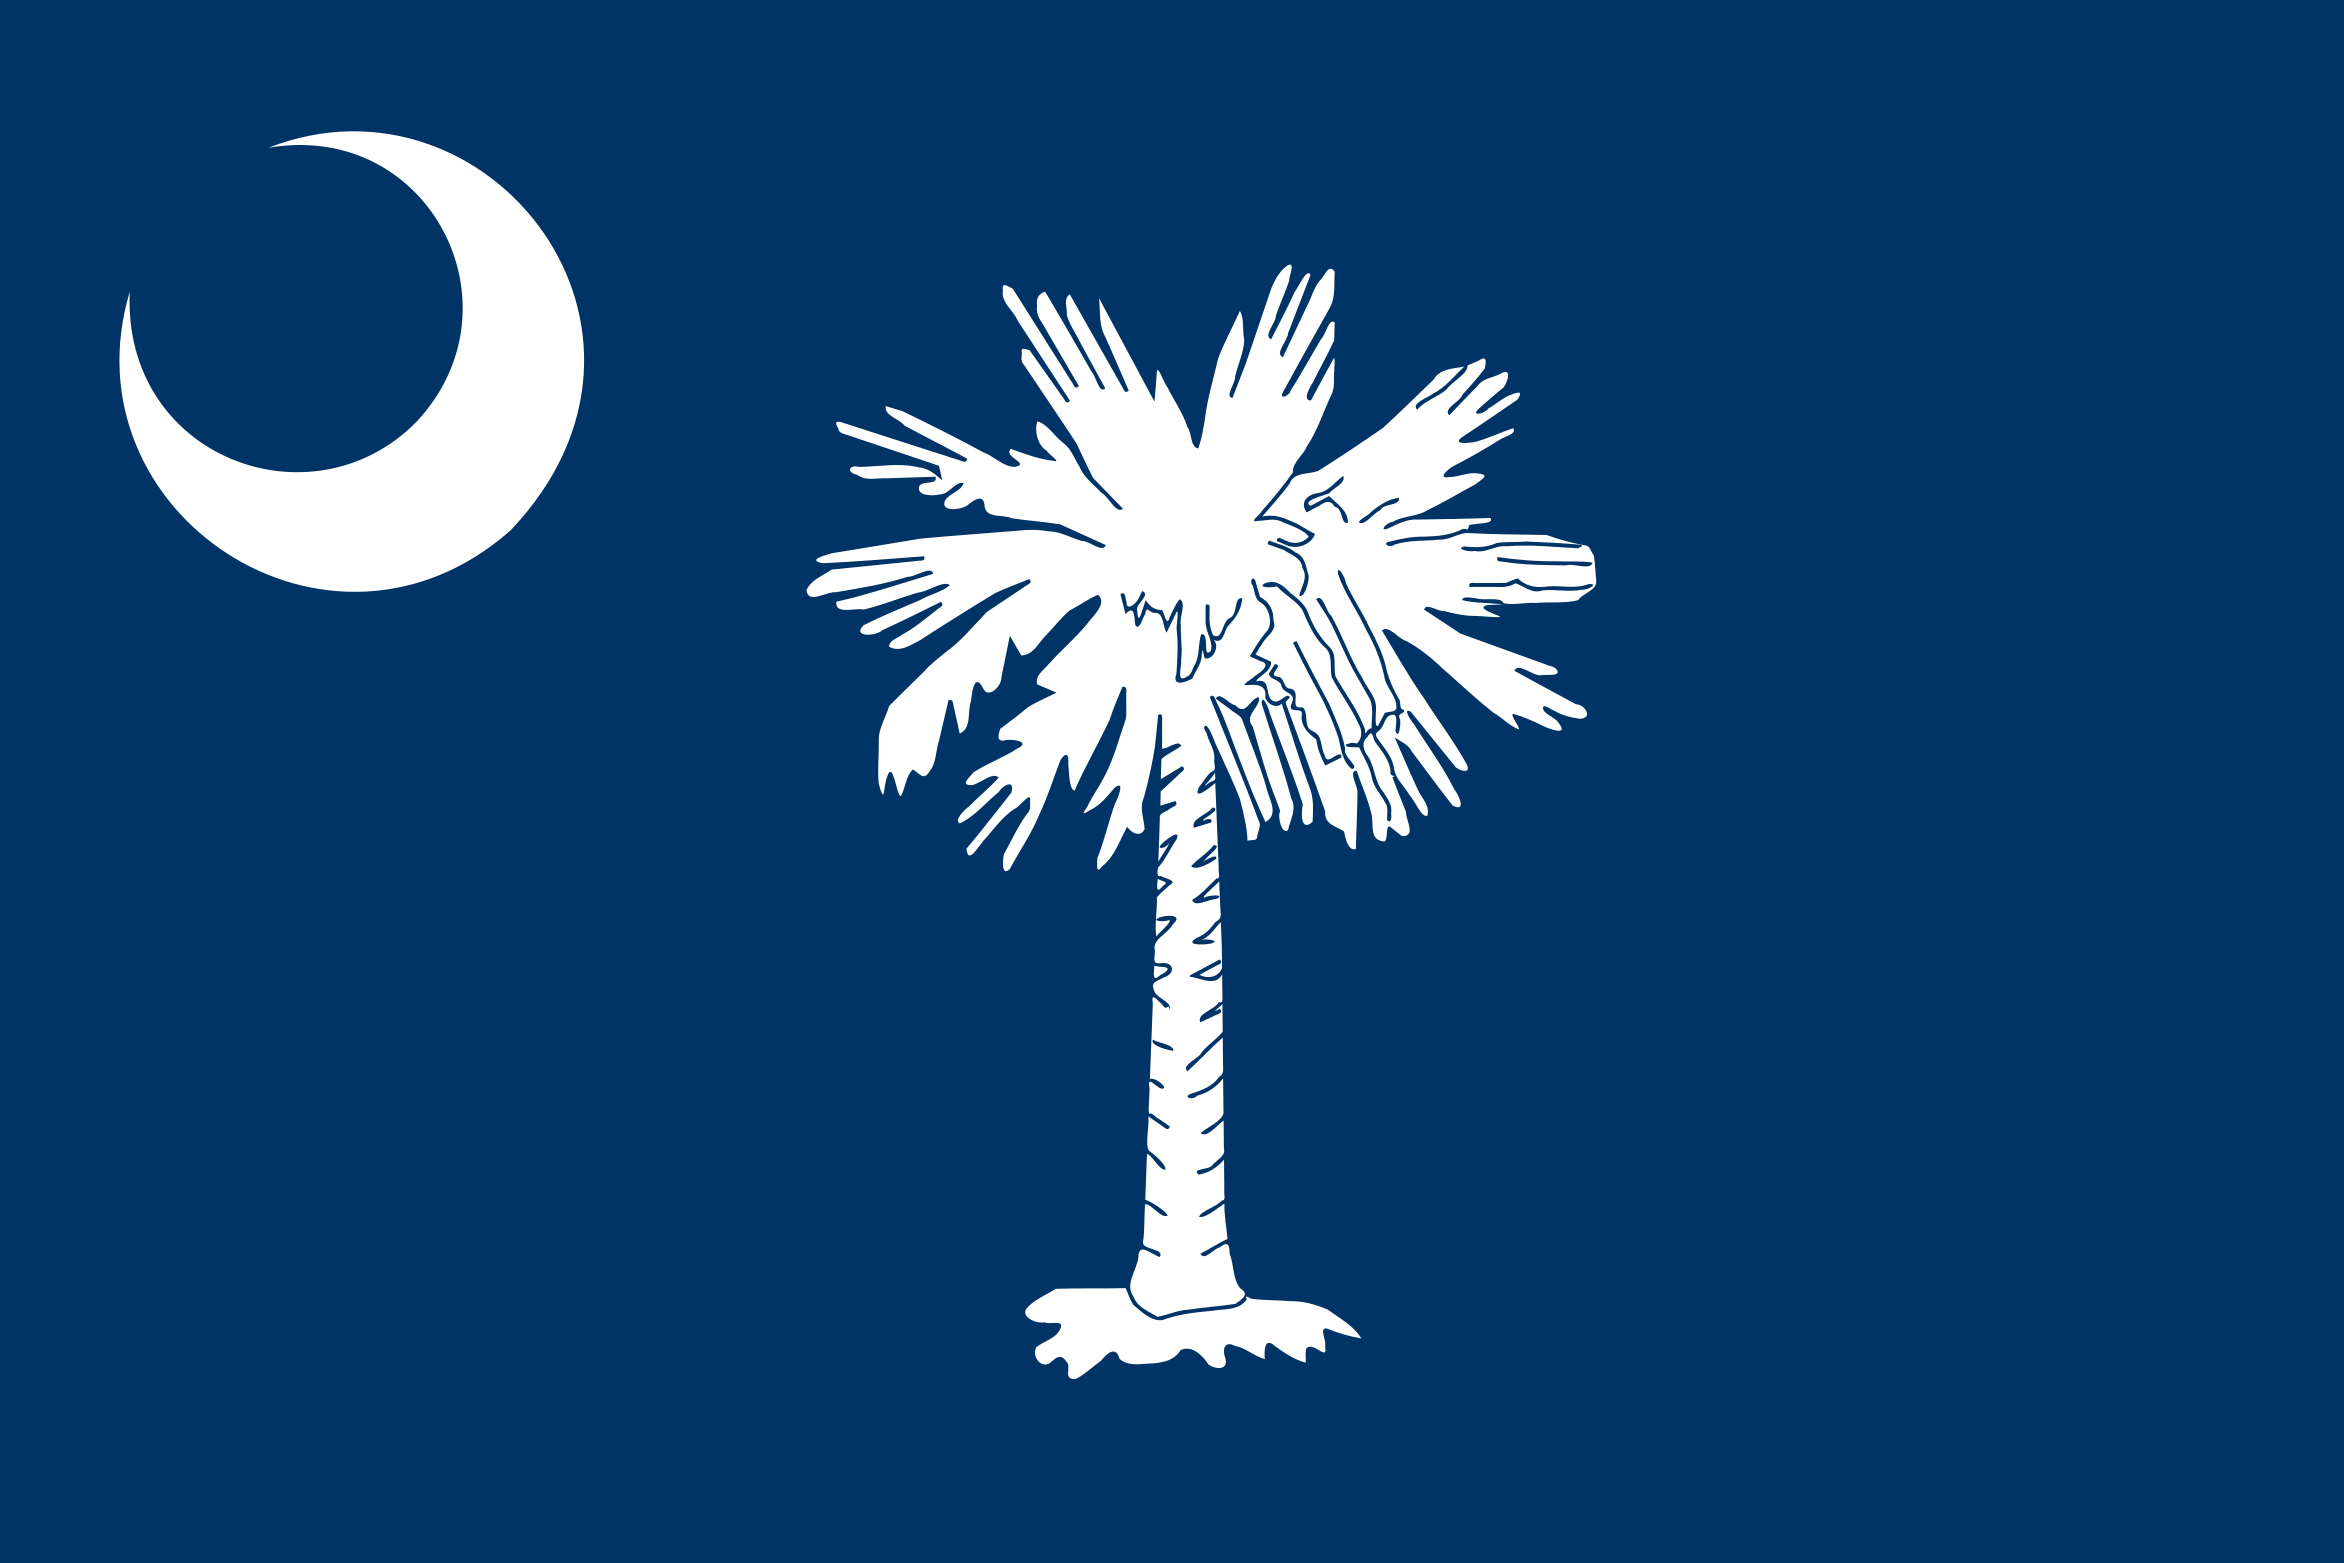 Free South Carolina Flag Images: AI, EPS, GIF, JPG, PDF, PNG, SVG and more!